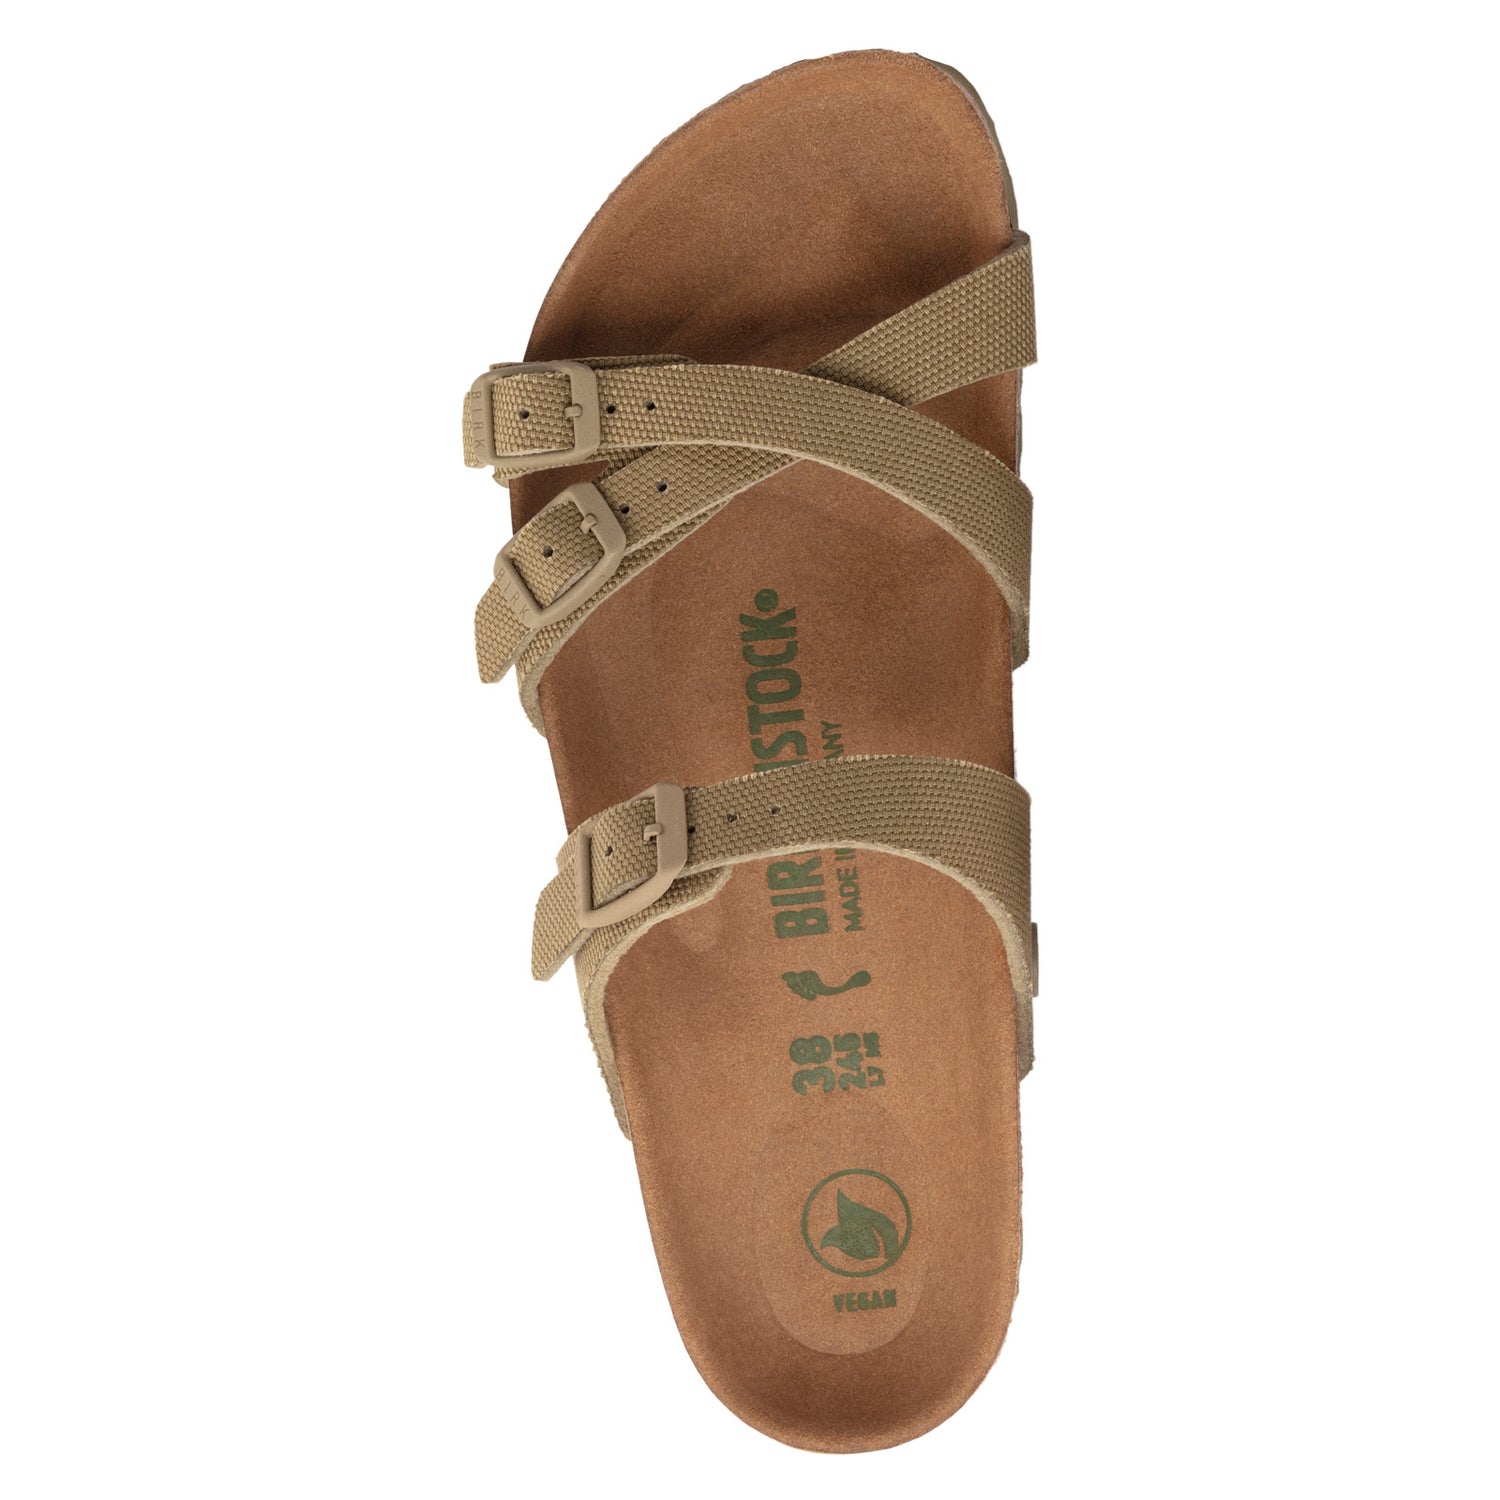 Peltz Shoes  Women's Birkenstock Franca Vegan Sandal - Regular Width KHAKI 1024 026 R